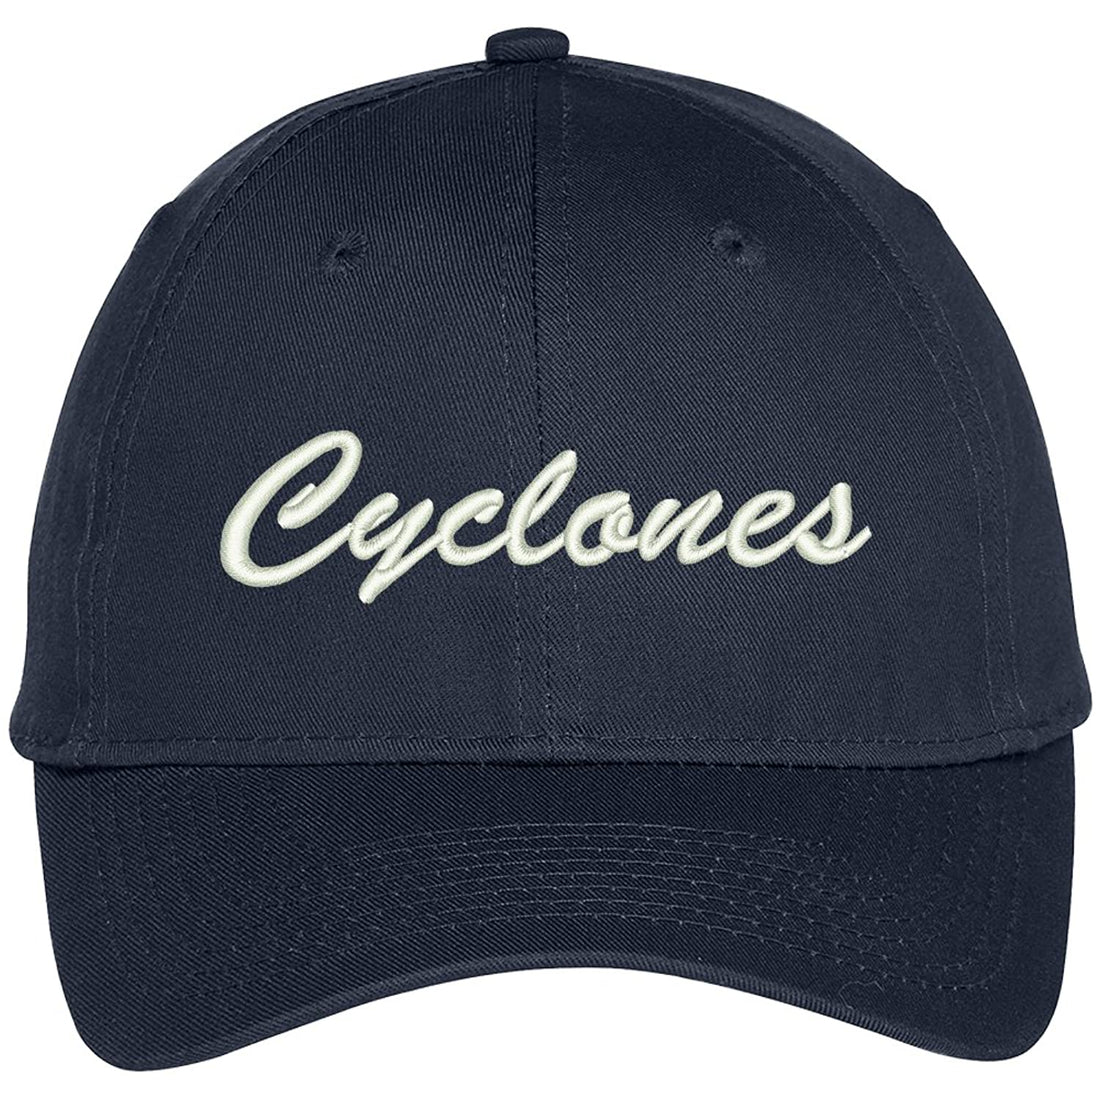 Trendy Apparel Shop Cyclones Embroidered Team Nickname Mascot Cap